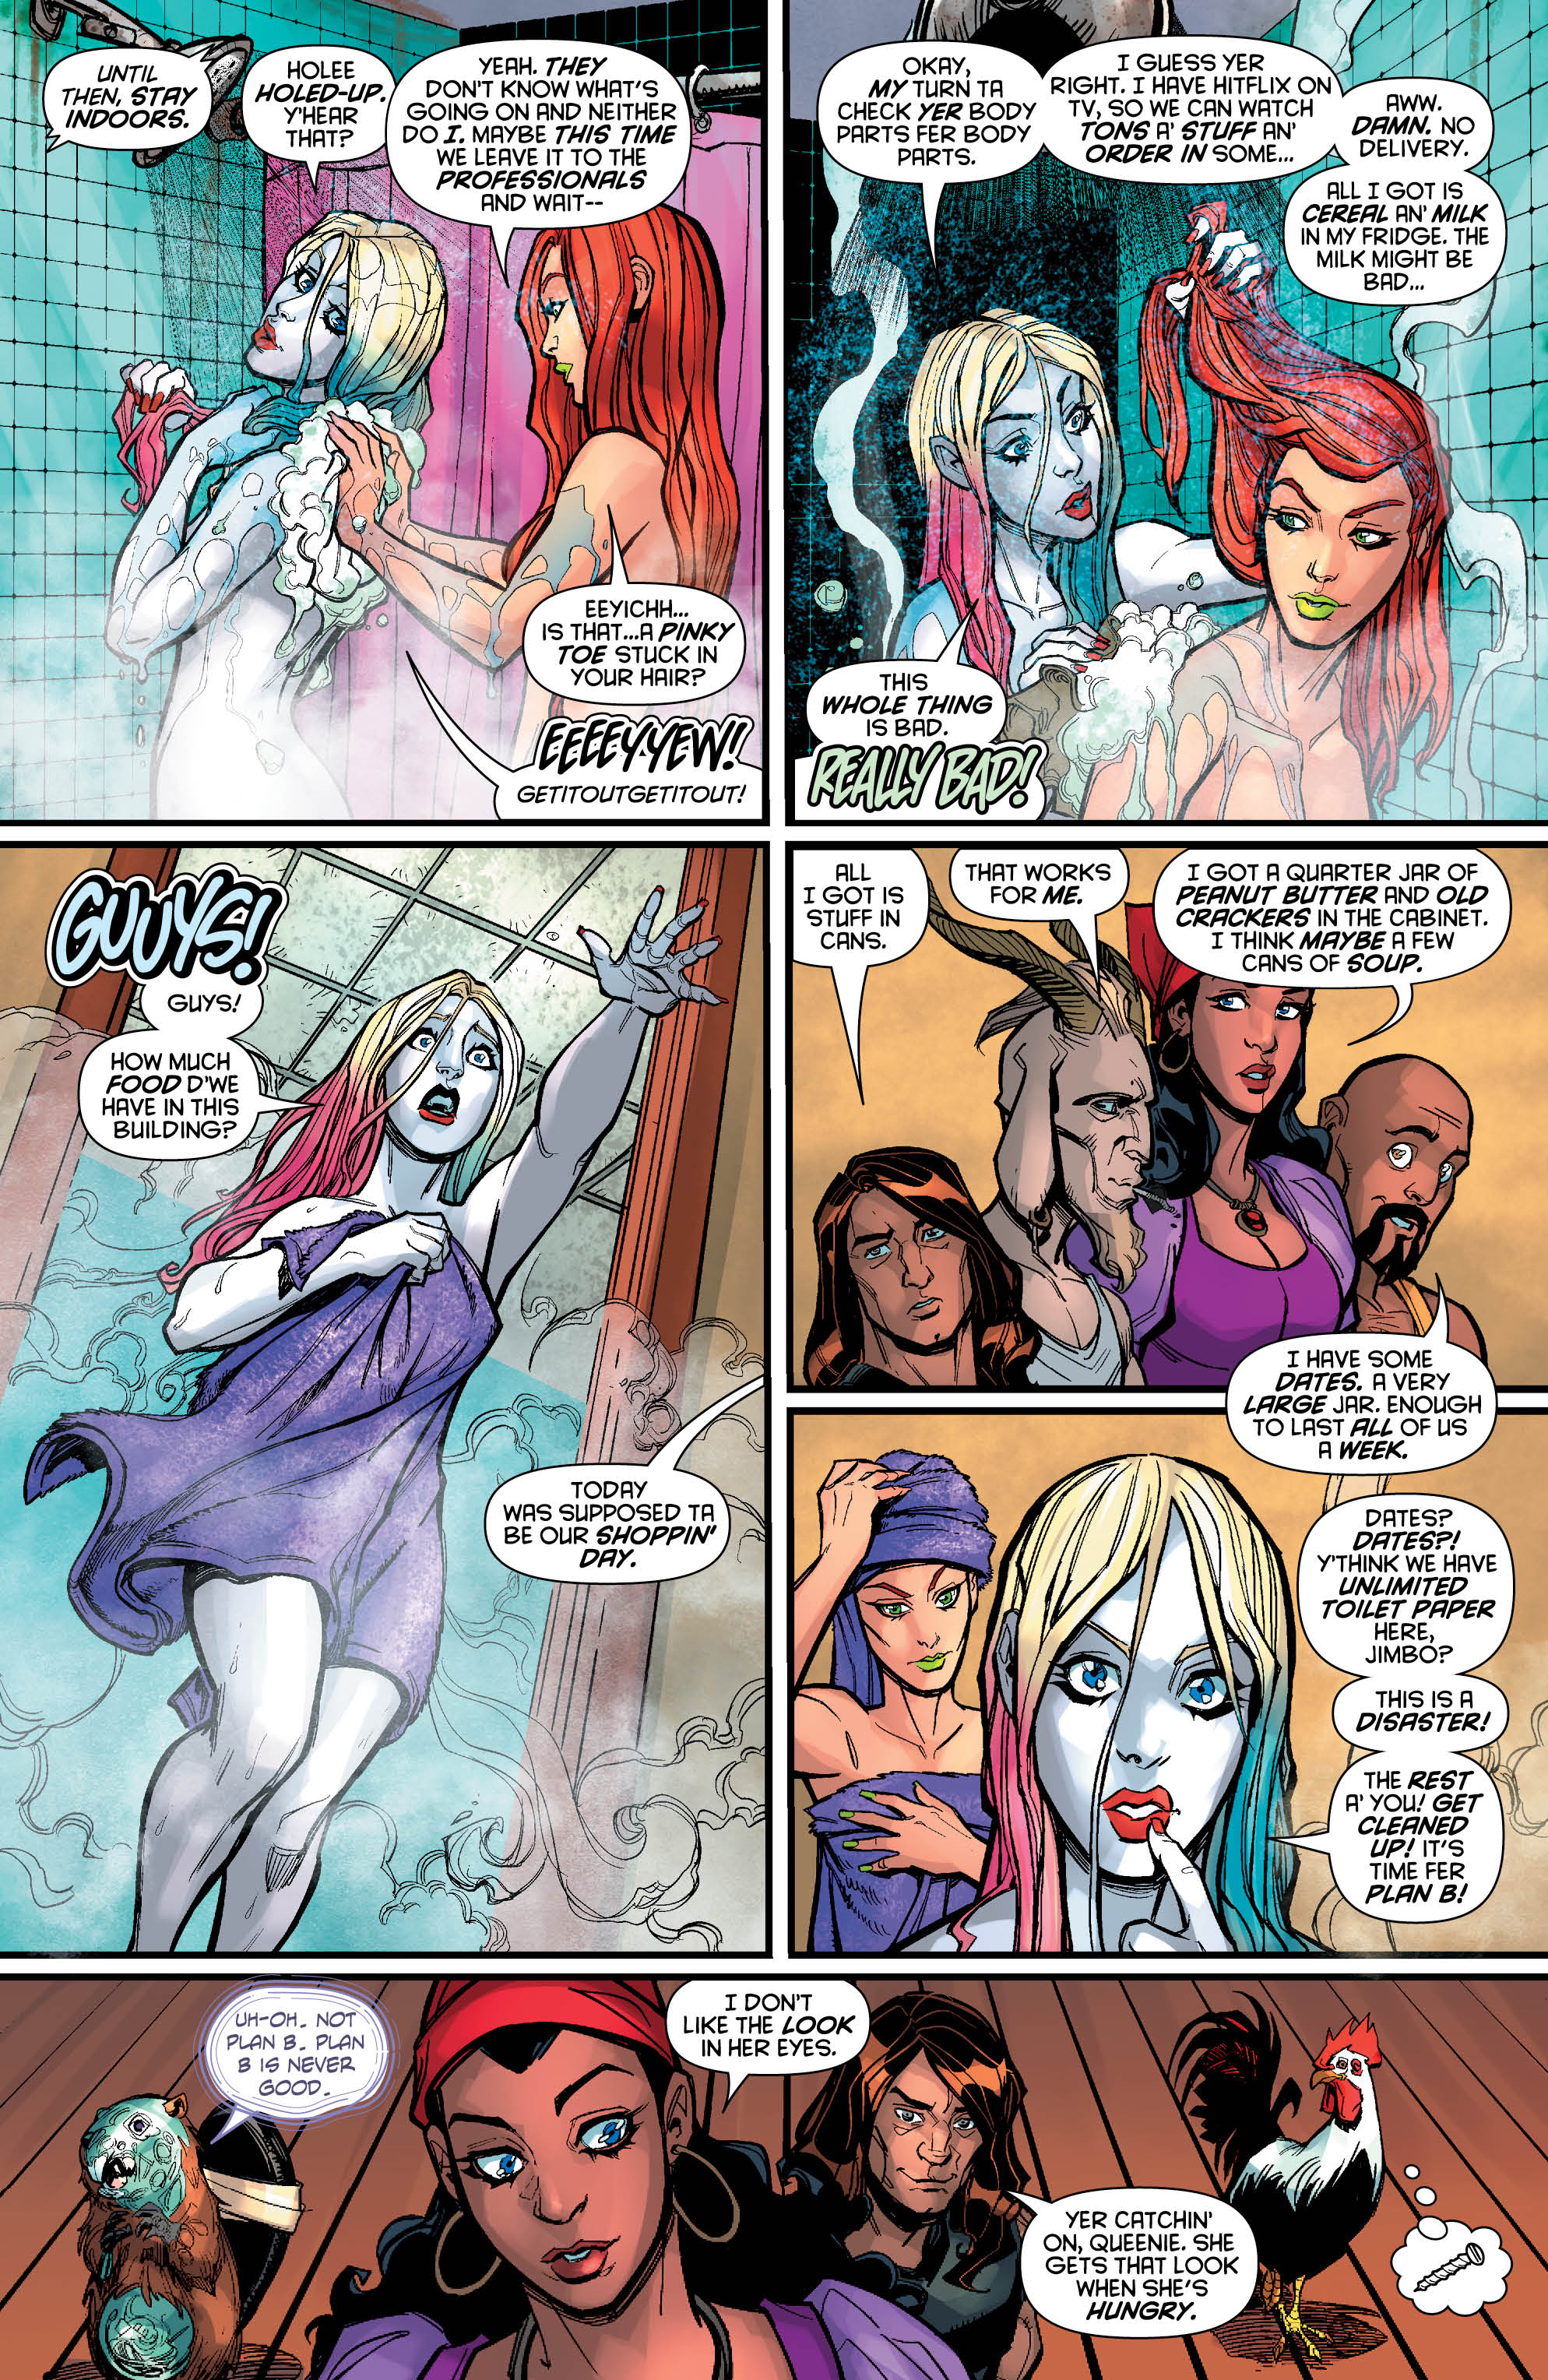 Harley Quinn #3